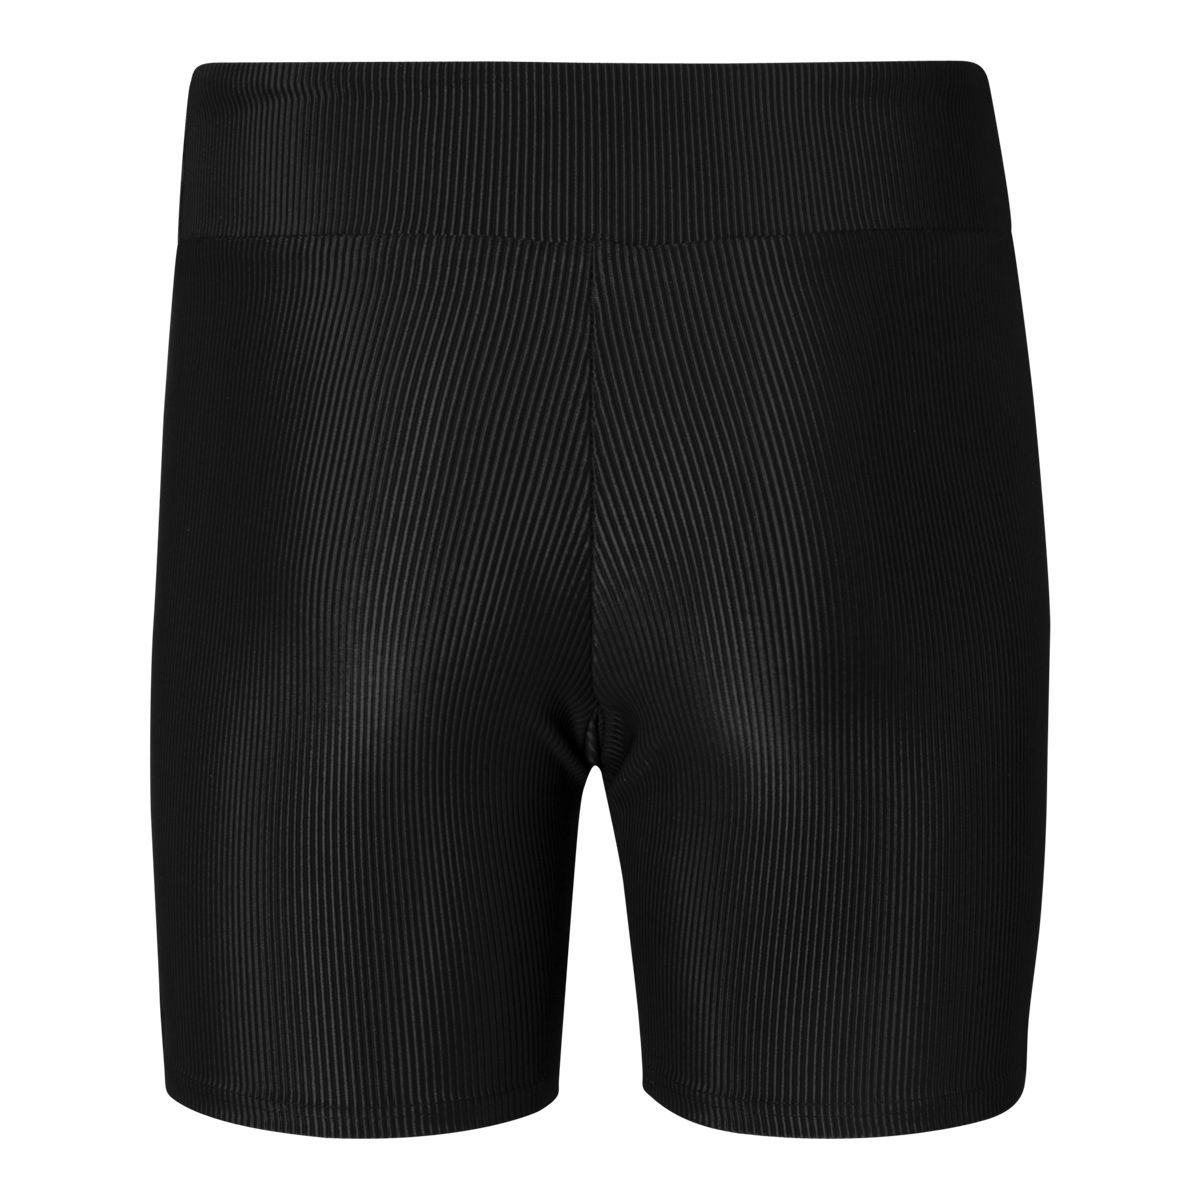 Wear Underwear Bike Shorts  X Tiger Cycling Shorts Ladies